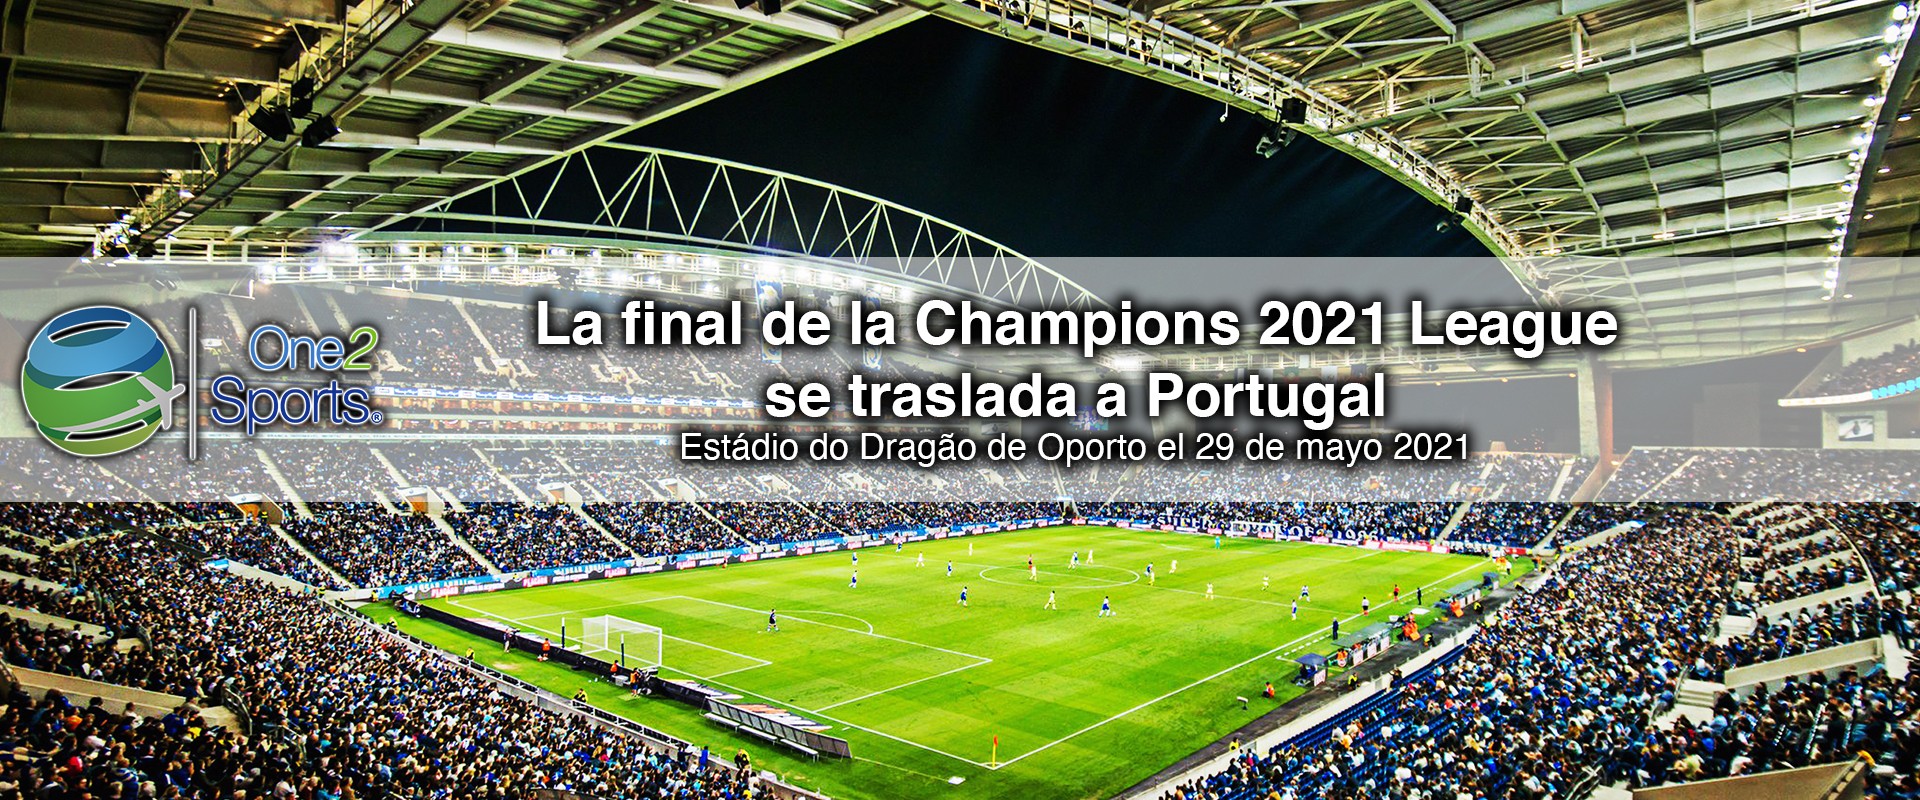 La final de la Champions 2021 League se traslada a Portugal